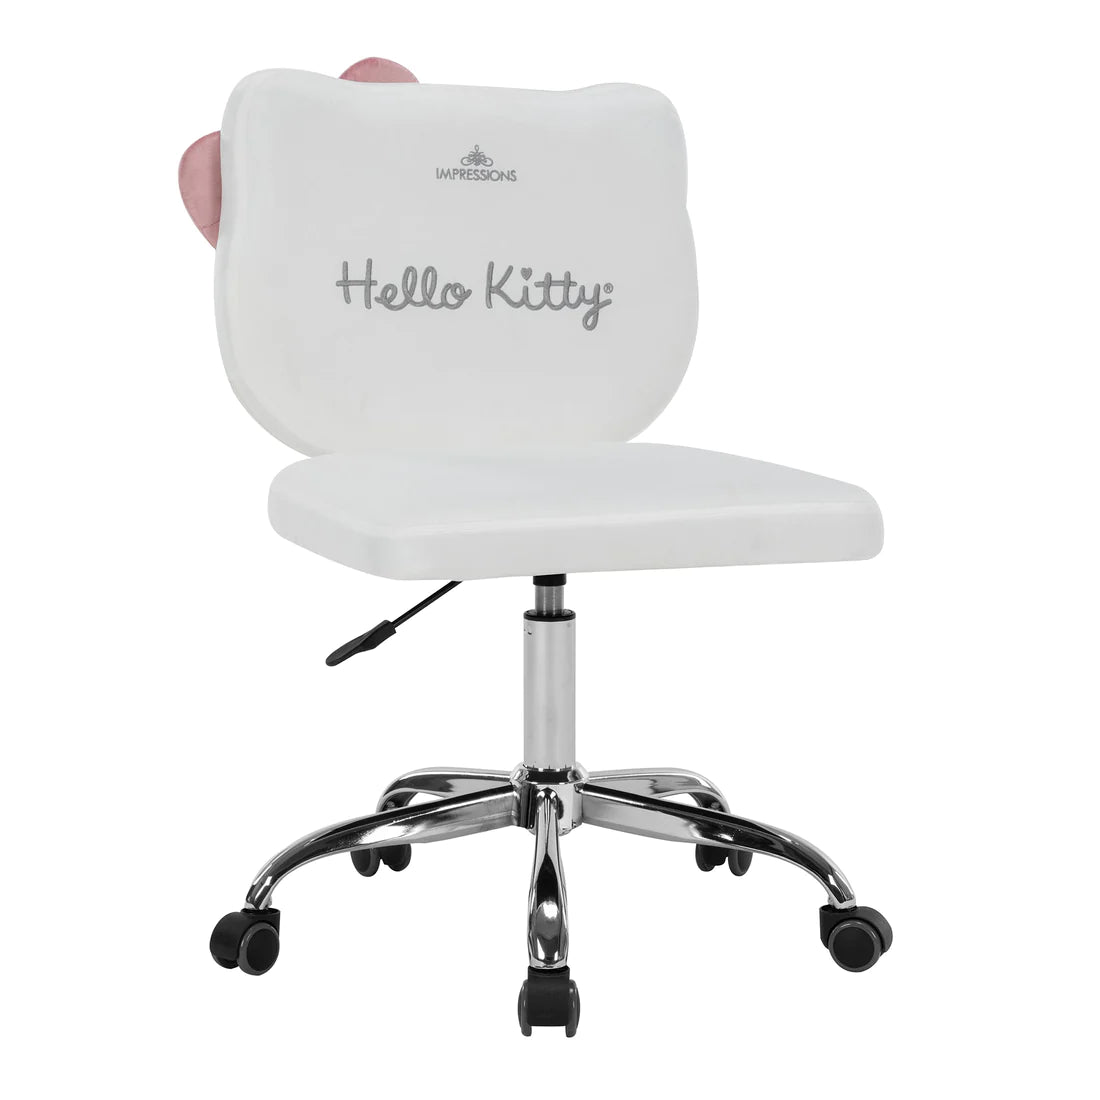 Impressions Vanity - Hello Kitty Kawaii Swivel Vanity Chair White